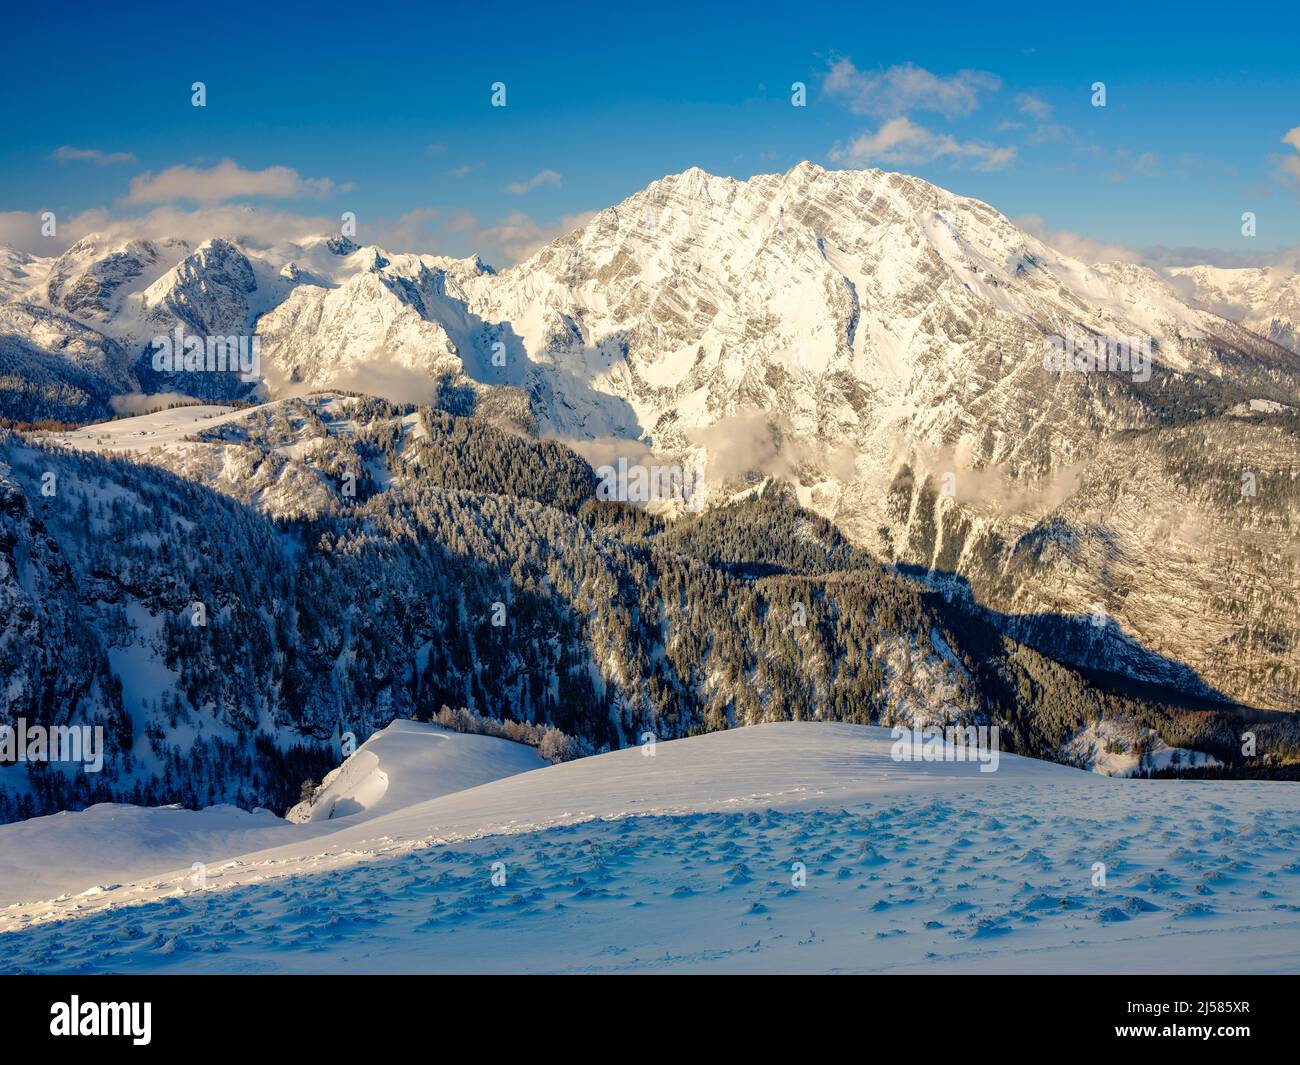 Snowy Watzmann East Face, Berchtesgaden Alps, Berchtesgaden National Park, Schoenau am Koenigssee, Berchtesgadener Land, Upper Bavaria, Bavaria Stock Photo